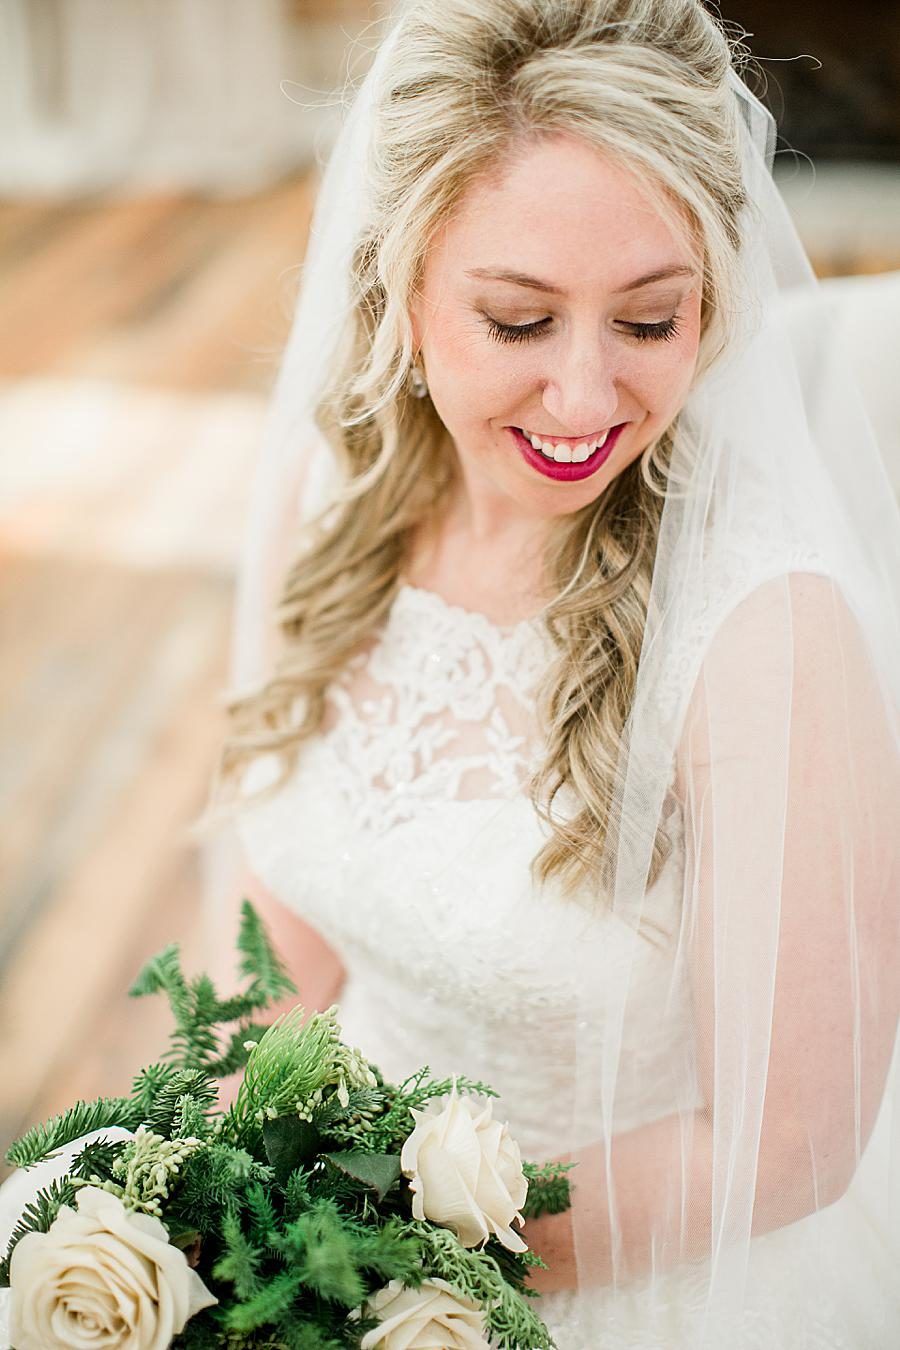 Bridal makeup by Knoxville Wedding Photographer, Amanda May Photos.